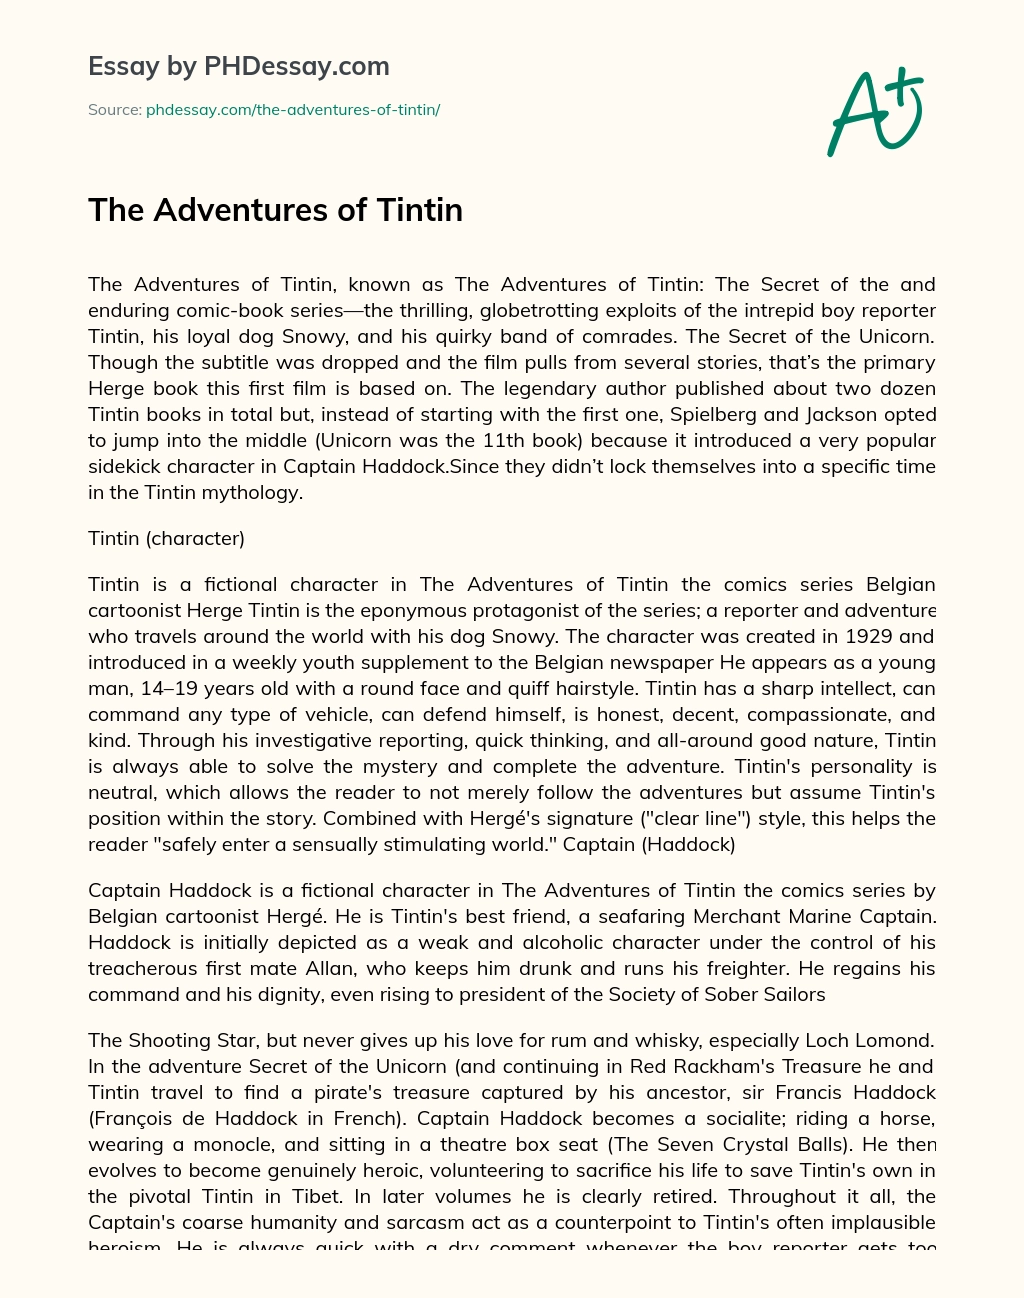 The Adventures of Tintin essay